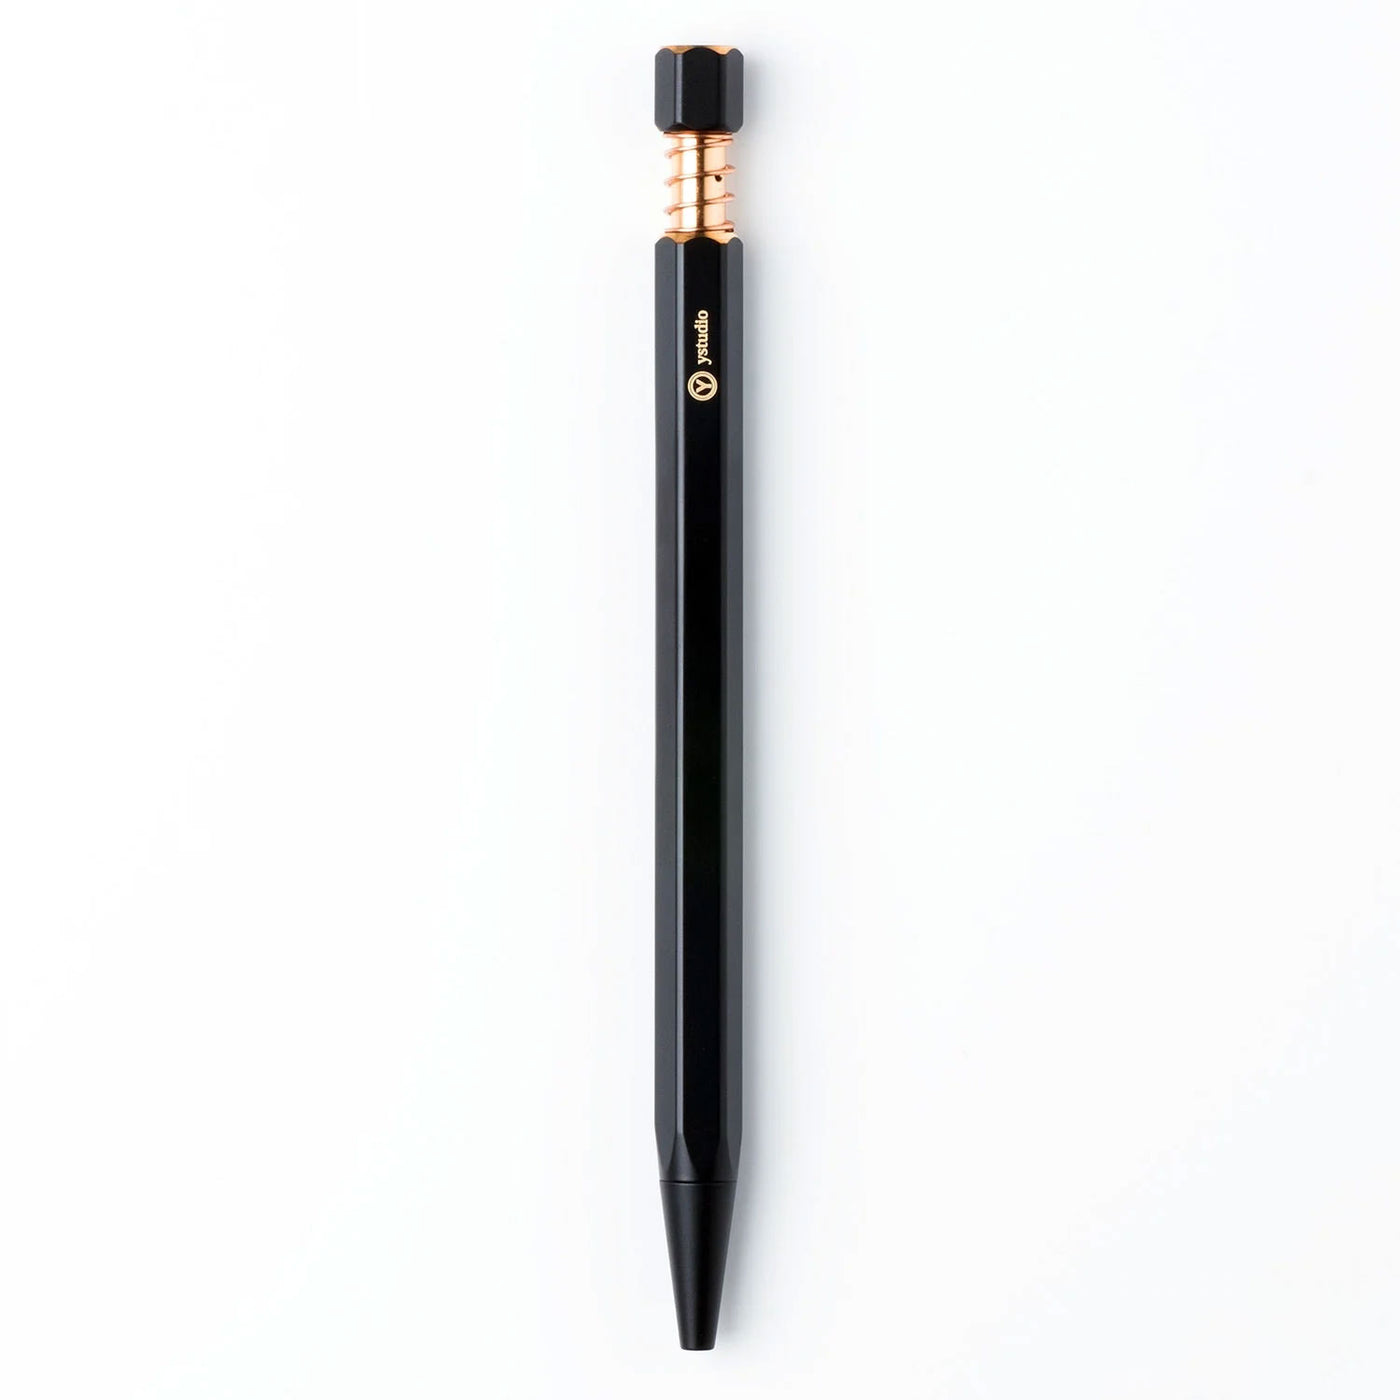 YSTUDIO Classic Revolve Spring Ball Pen Black 2